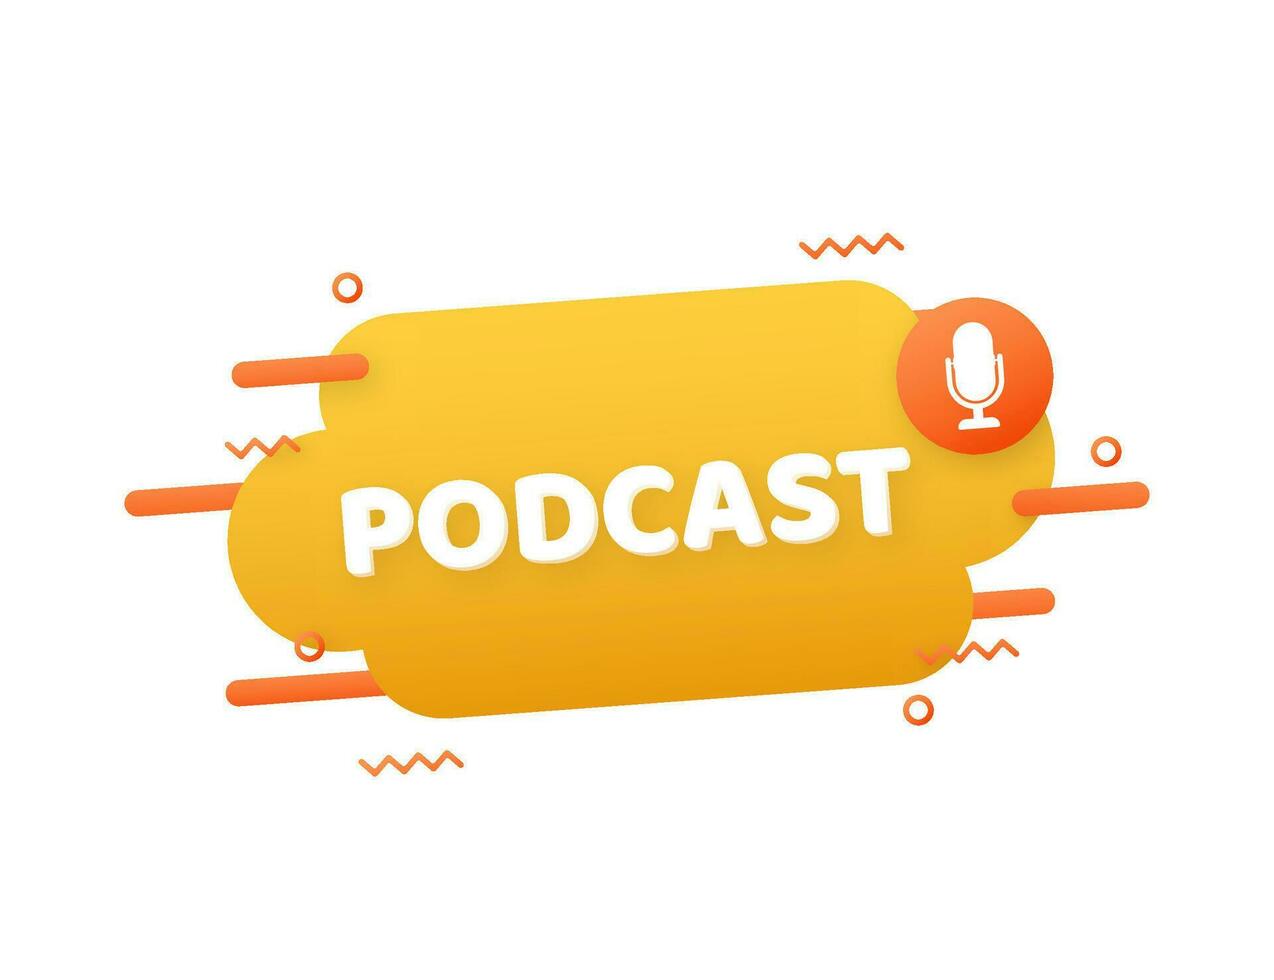 Podcast. Abzeichen, Symbol Briefmarke Logo Vektor Lager Illustration